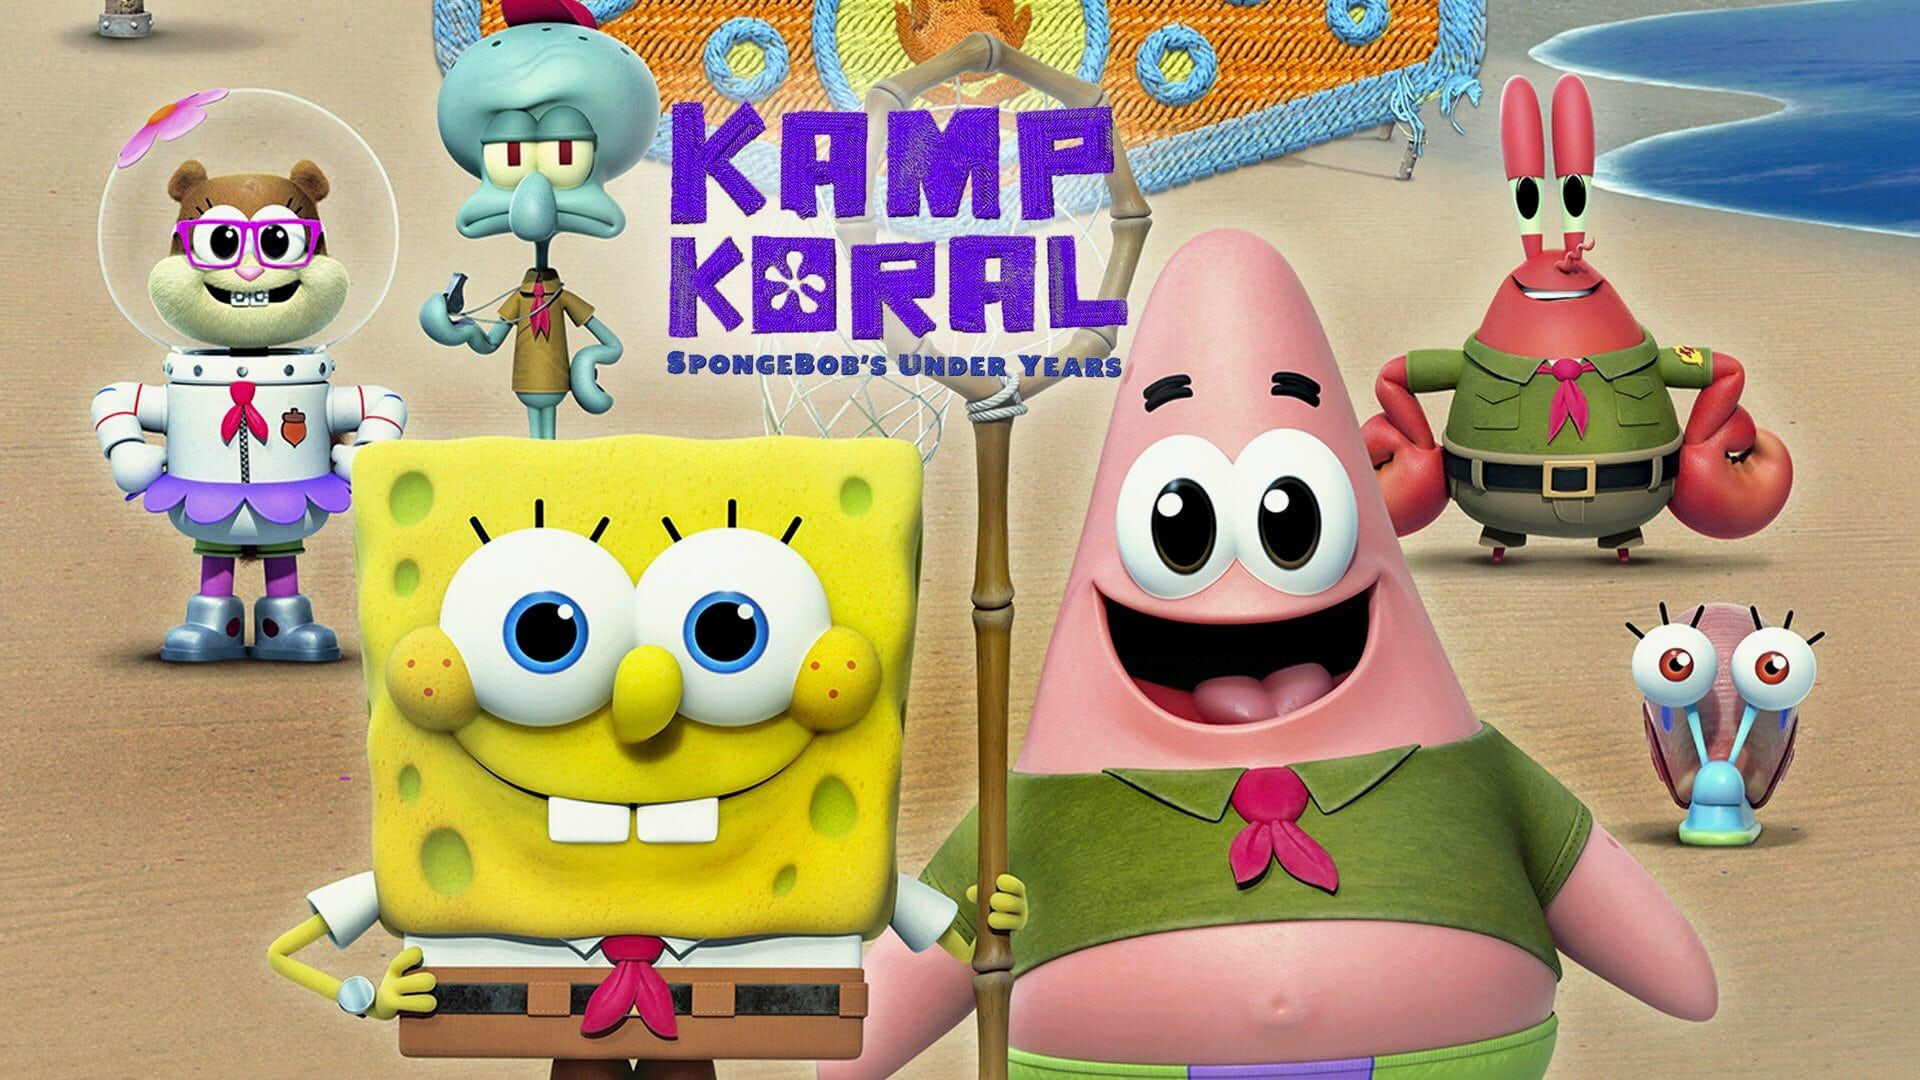 Show Kamp Koral: SpongeBob's Under Years